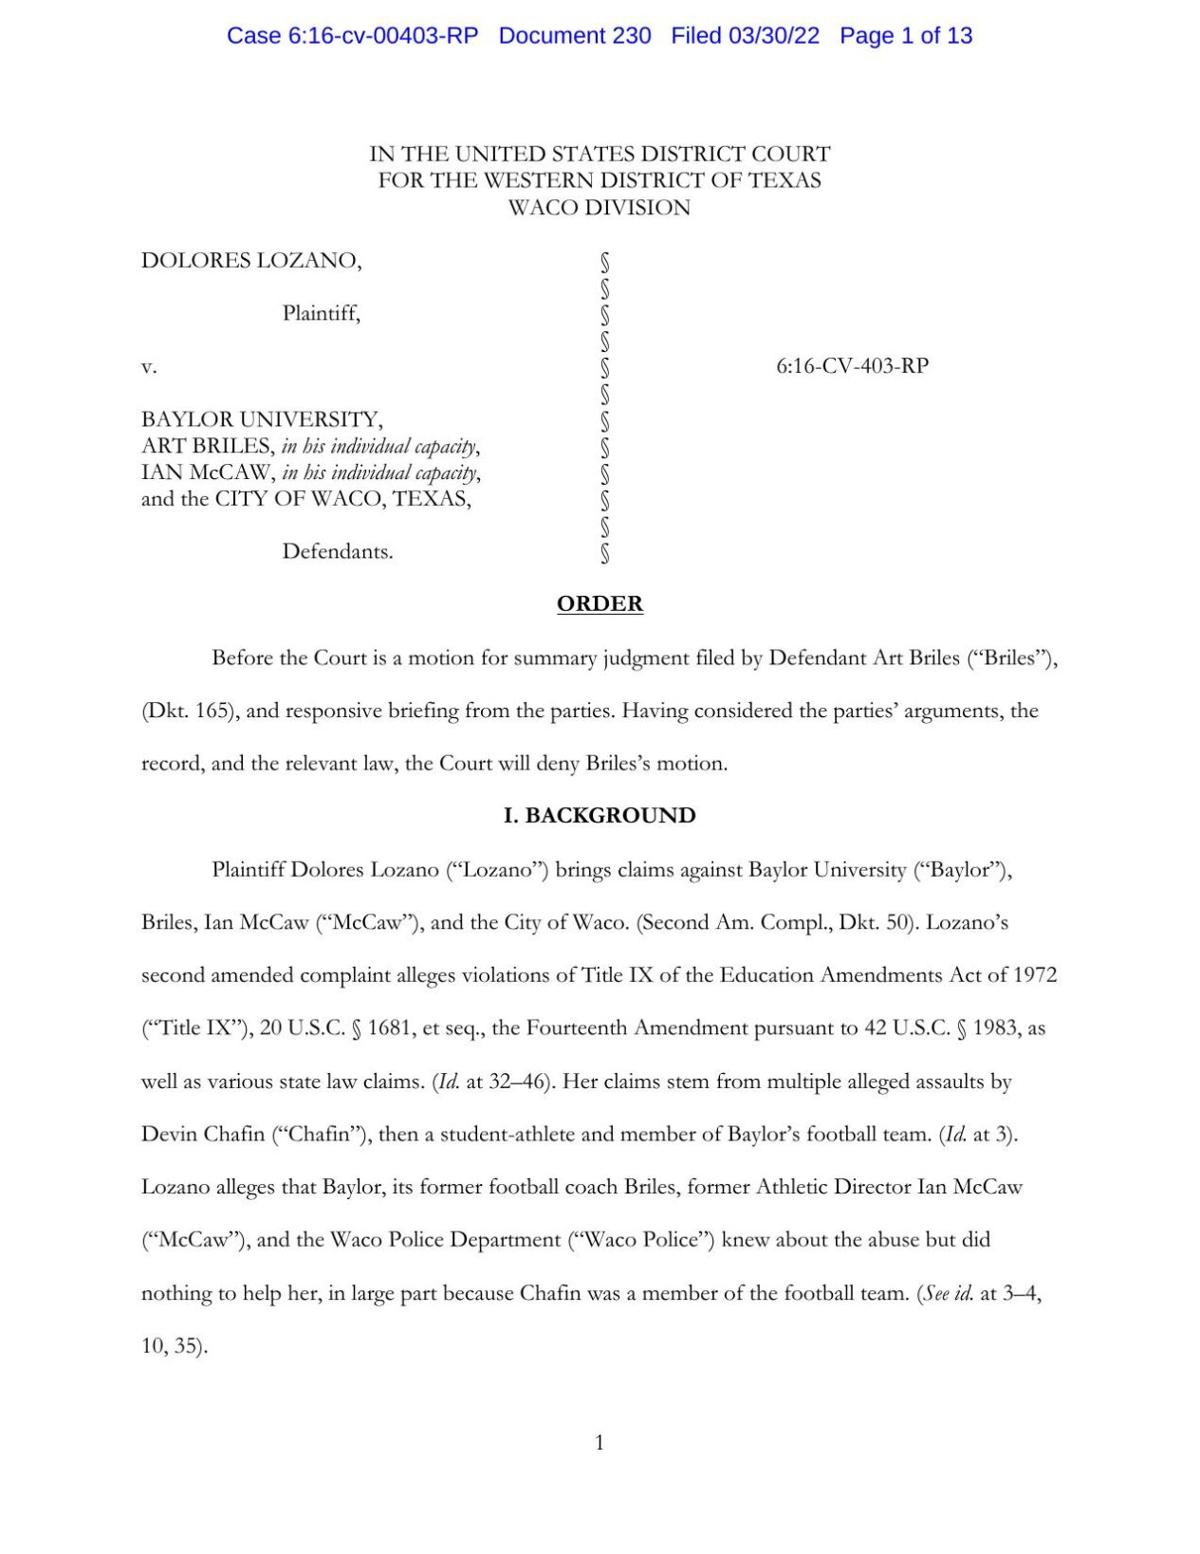 PDF: Judge denies Art Briles' motion for summary judgment